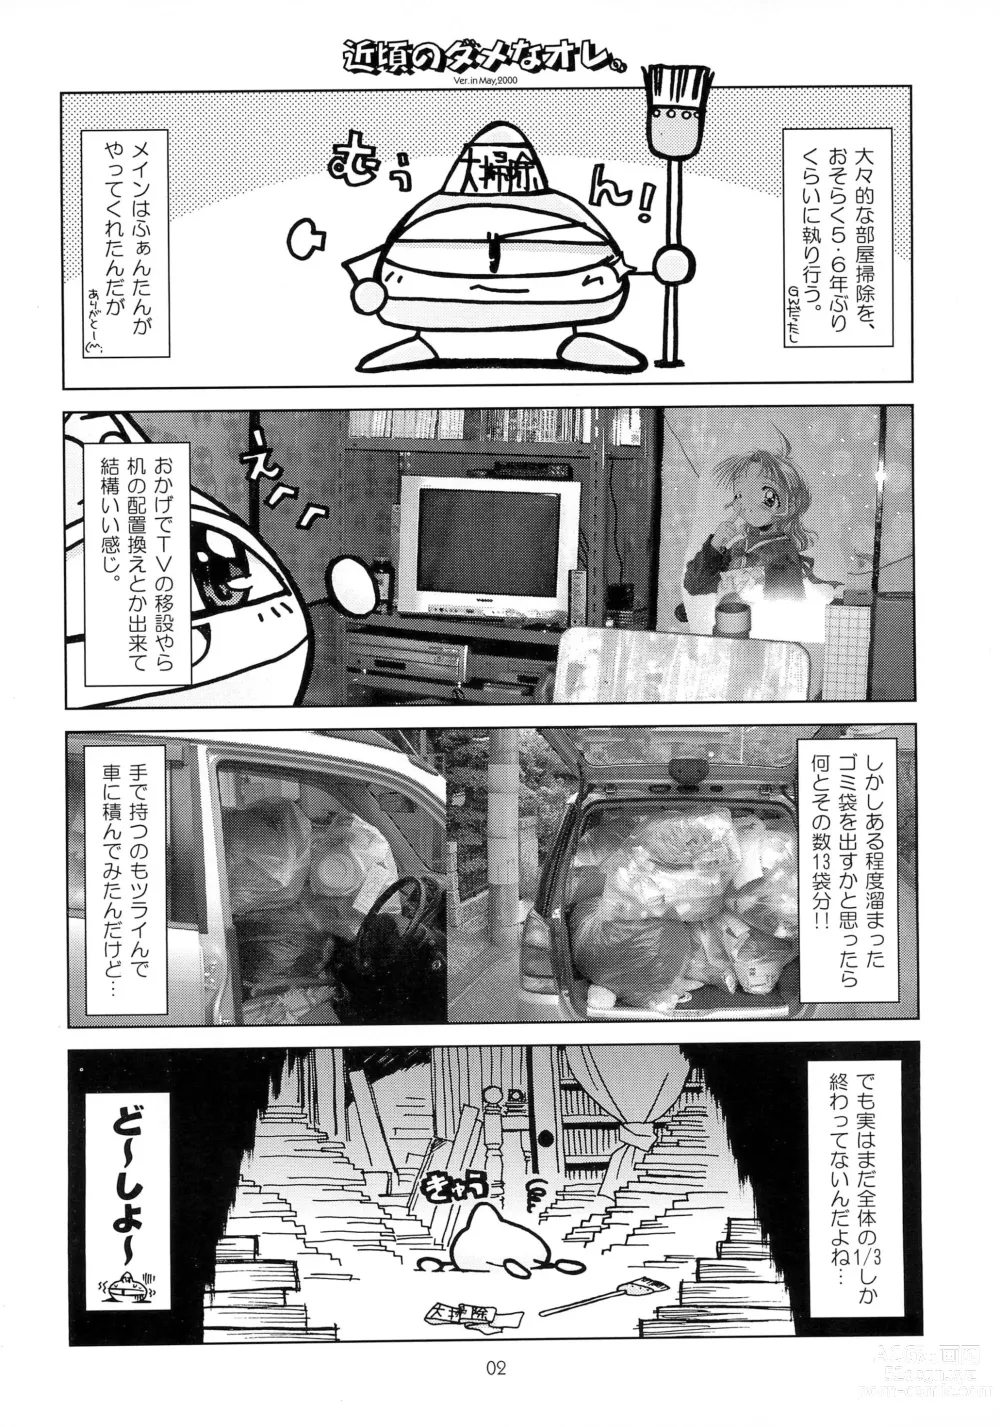 Page 2 of doujinshi CR27-gami Lv.2